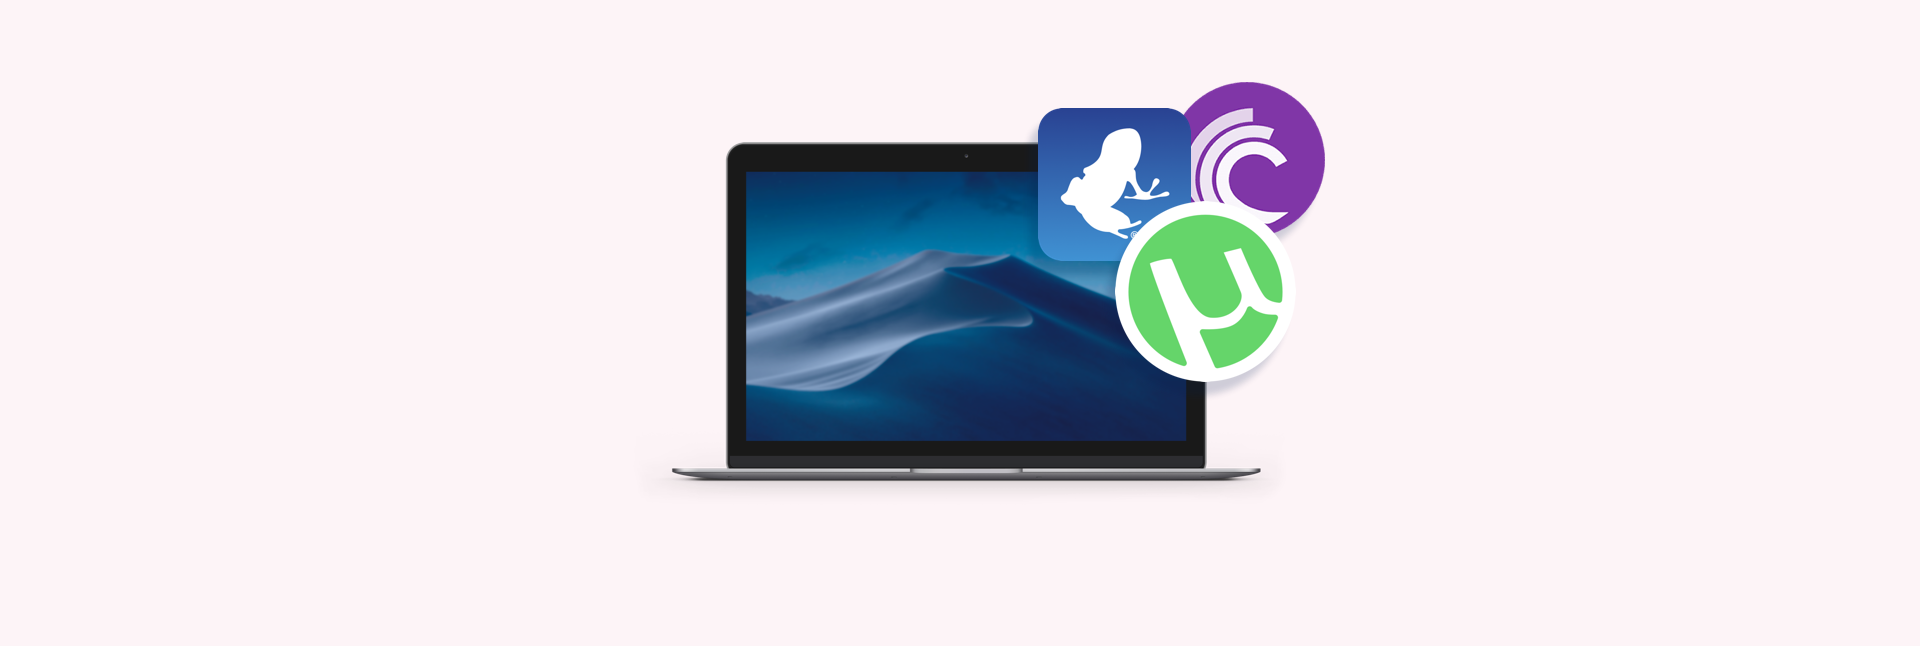 Download Torrents on iPhone, iPad & iPod